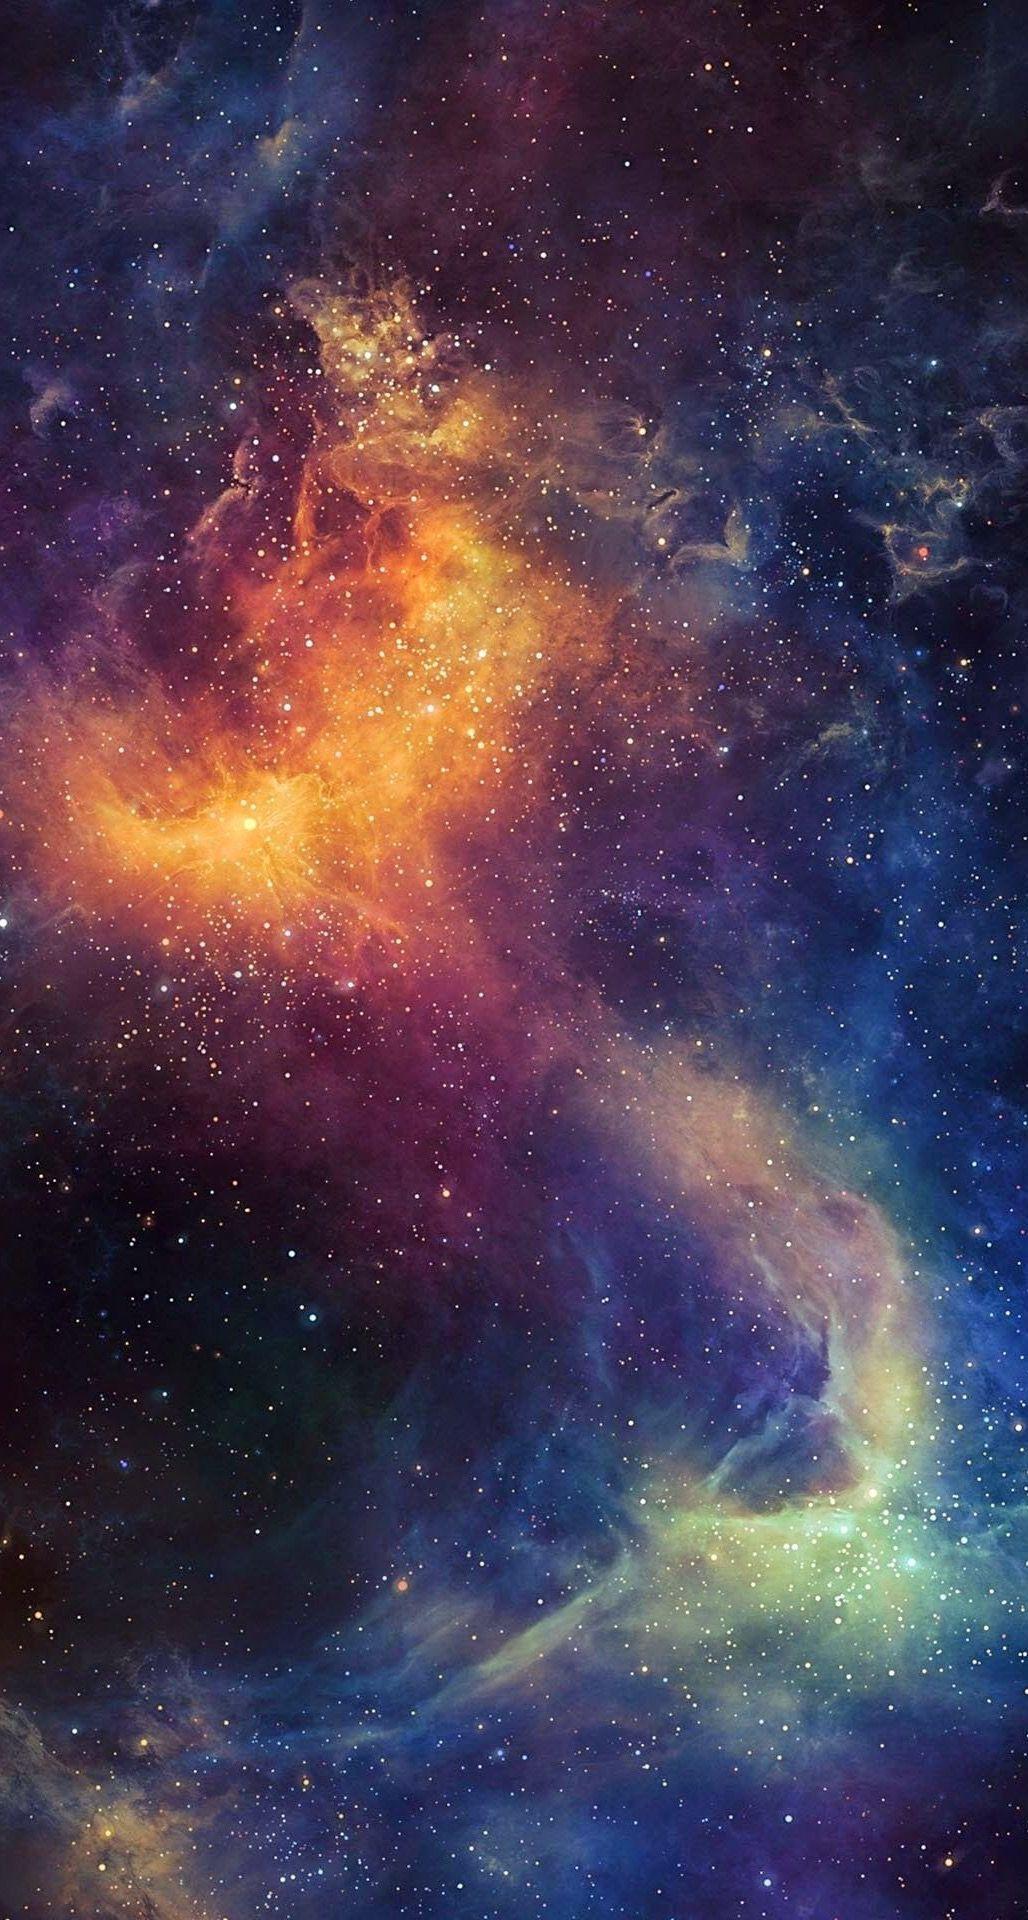 Beautiful Colored Space Nebula iPhone 6 Plus HD Wallpaper. Space iphone wallpaper, Galaxy wallpaper, Galaxy wallpaper iphone